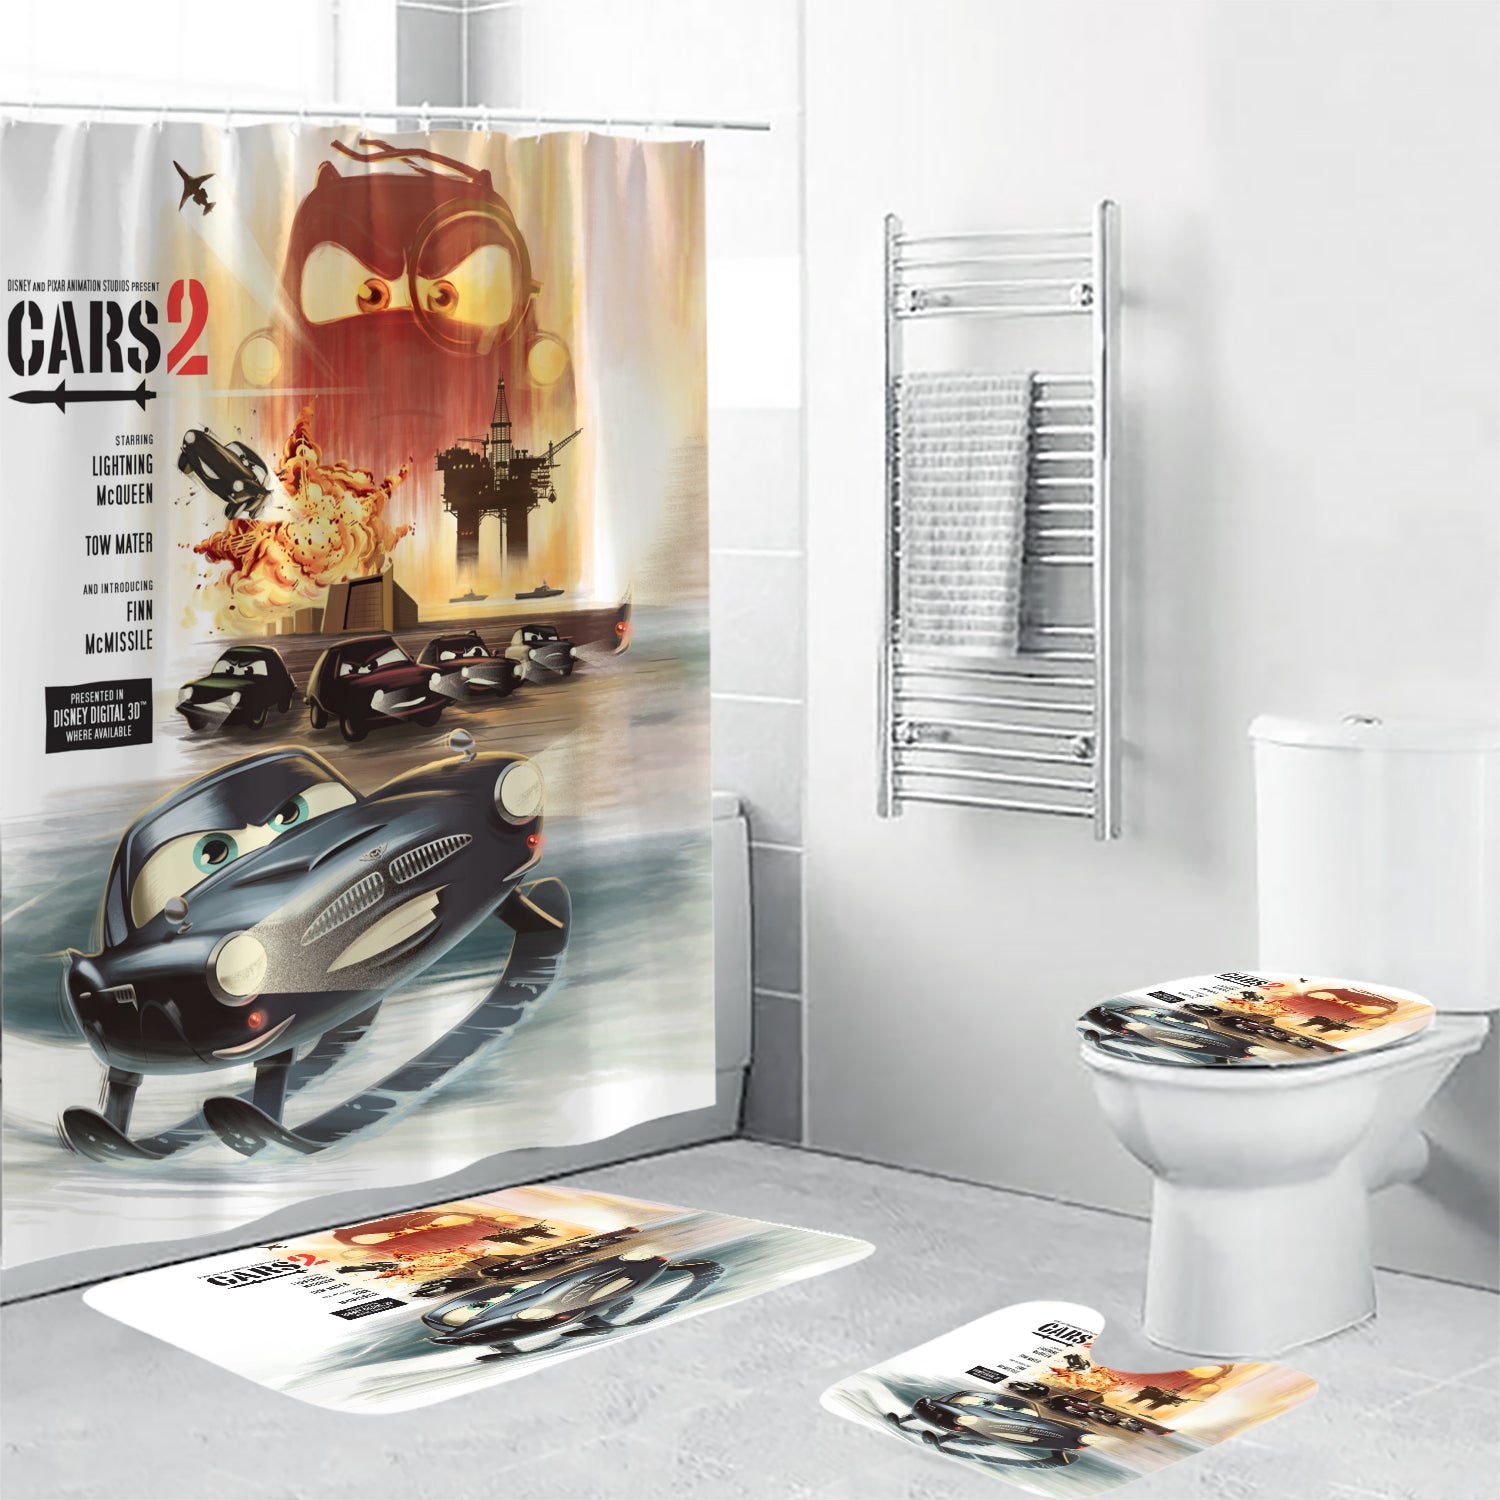 Cars Poster 8 4PCS Shower Curtain Non-Slip Toilet Lid Cover Bath Mat - Bathroom Set Fans Gifts